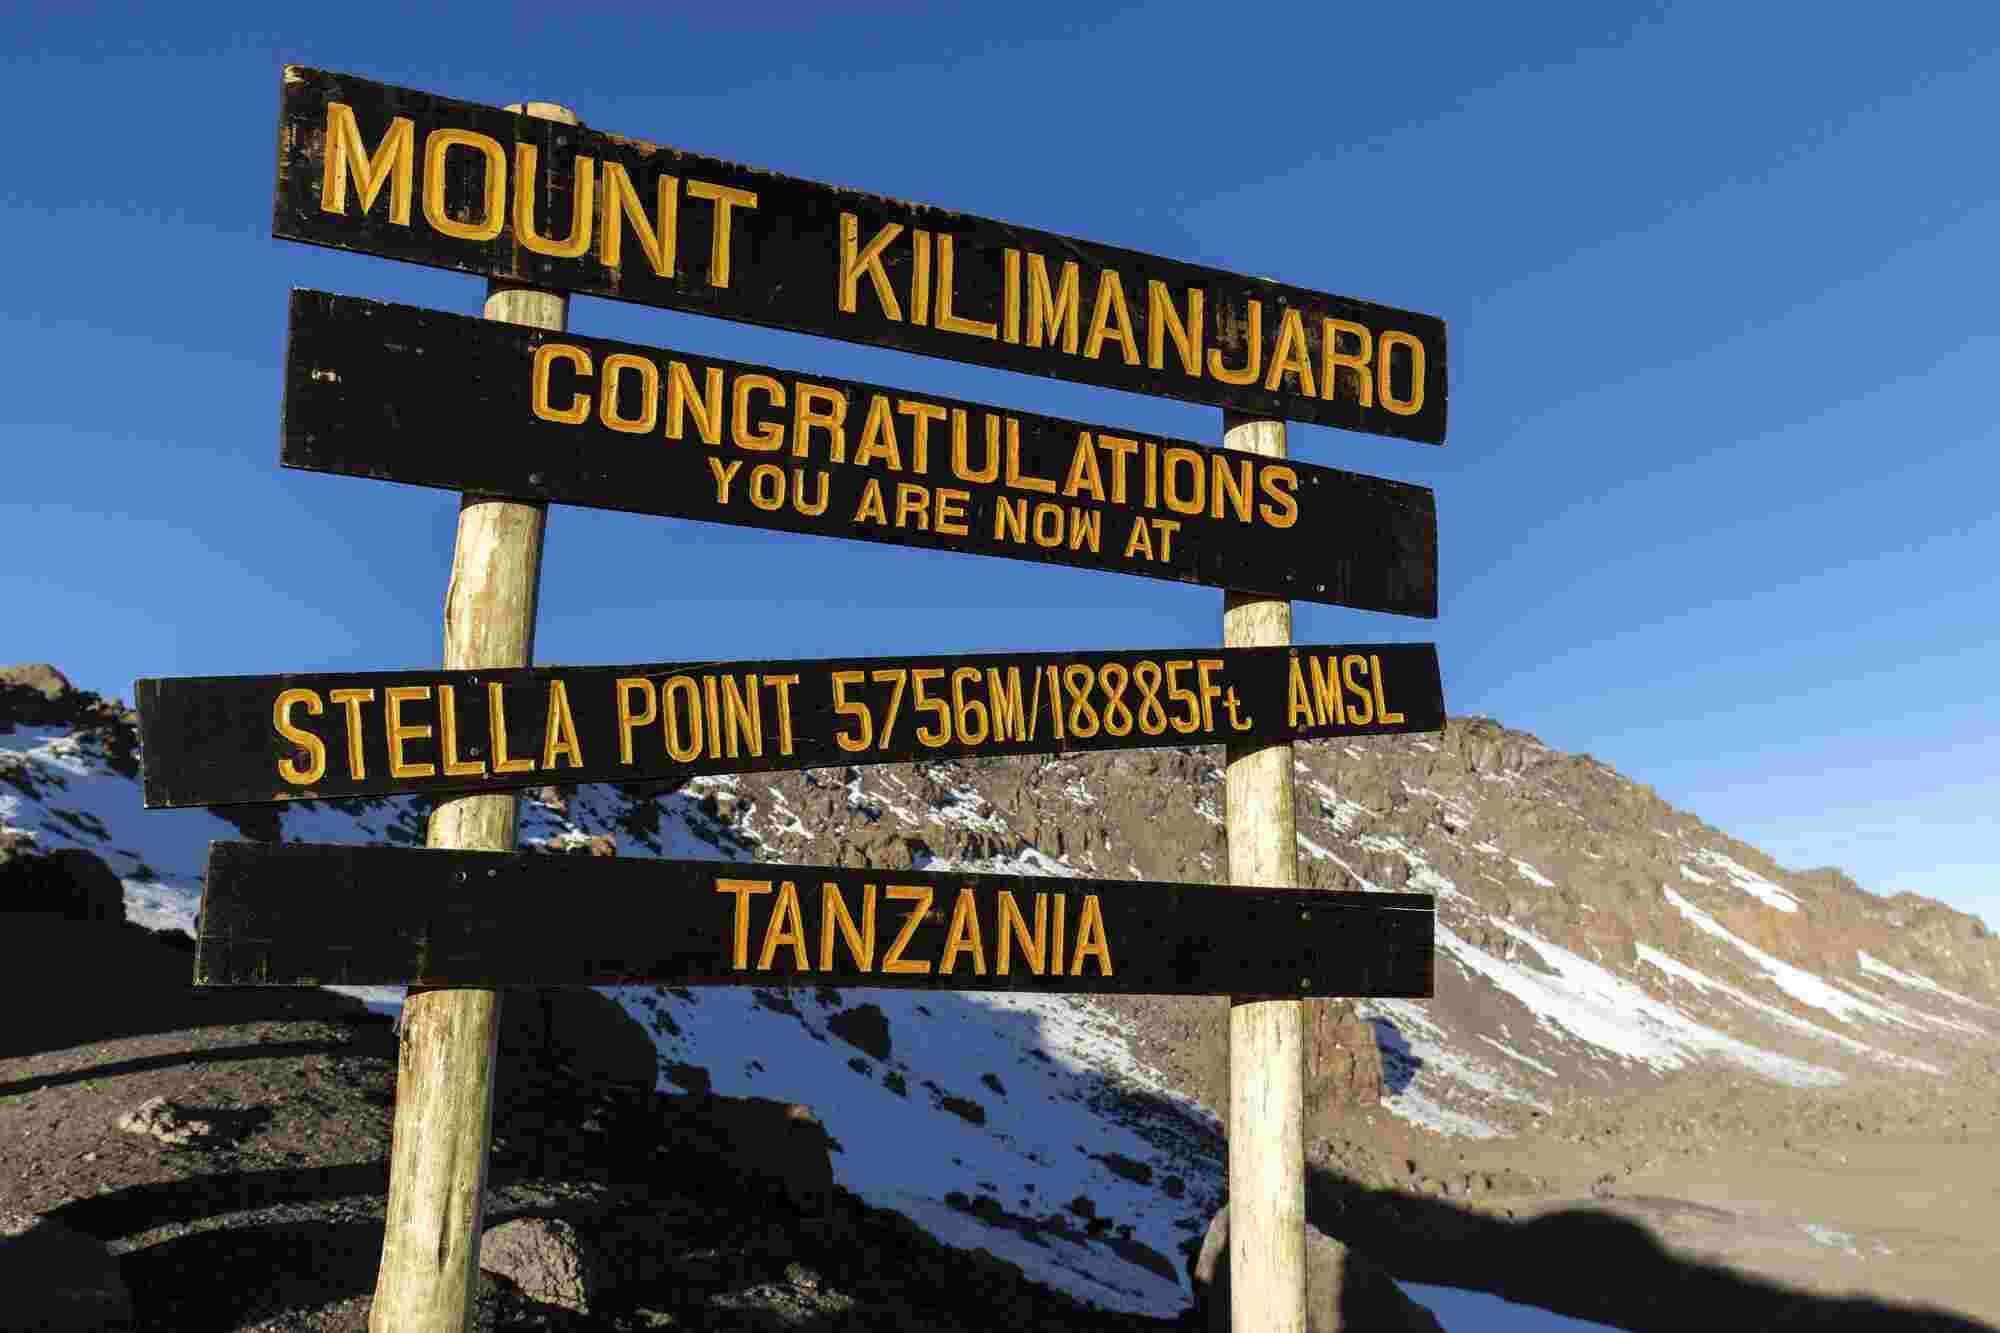 first person to climb mount kilimanjaro